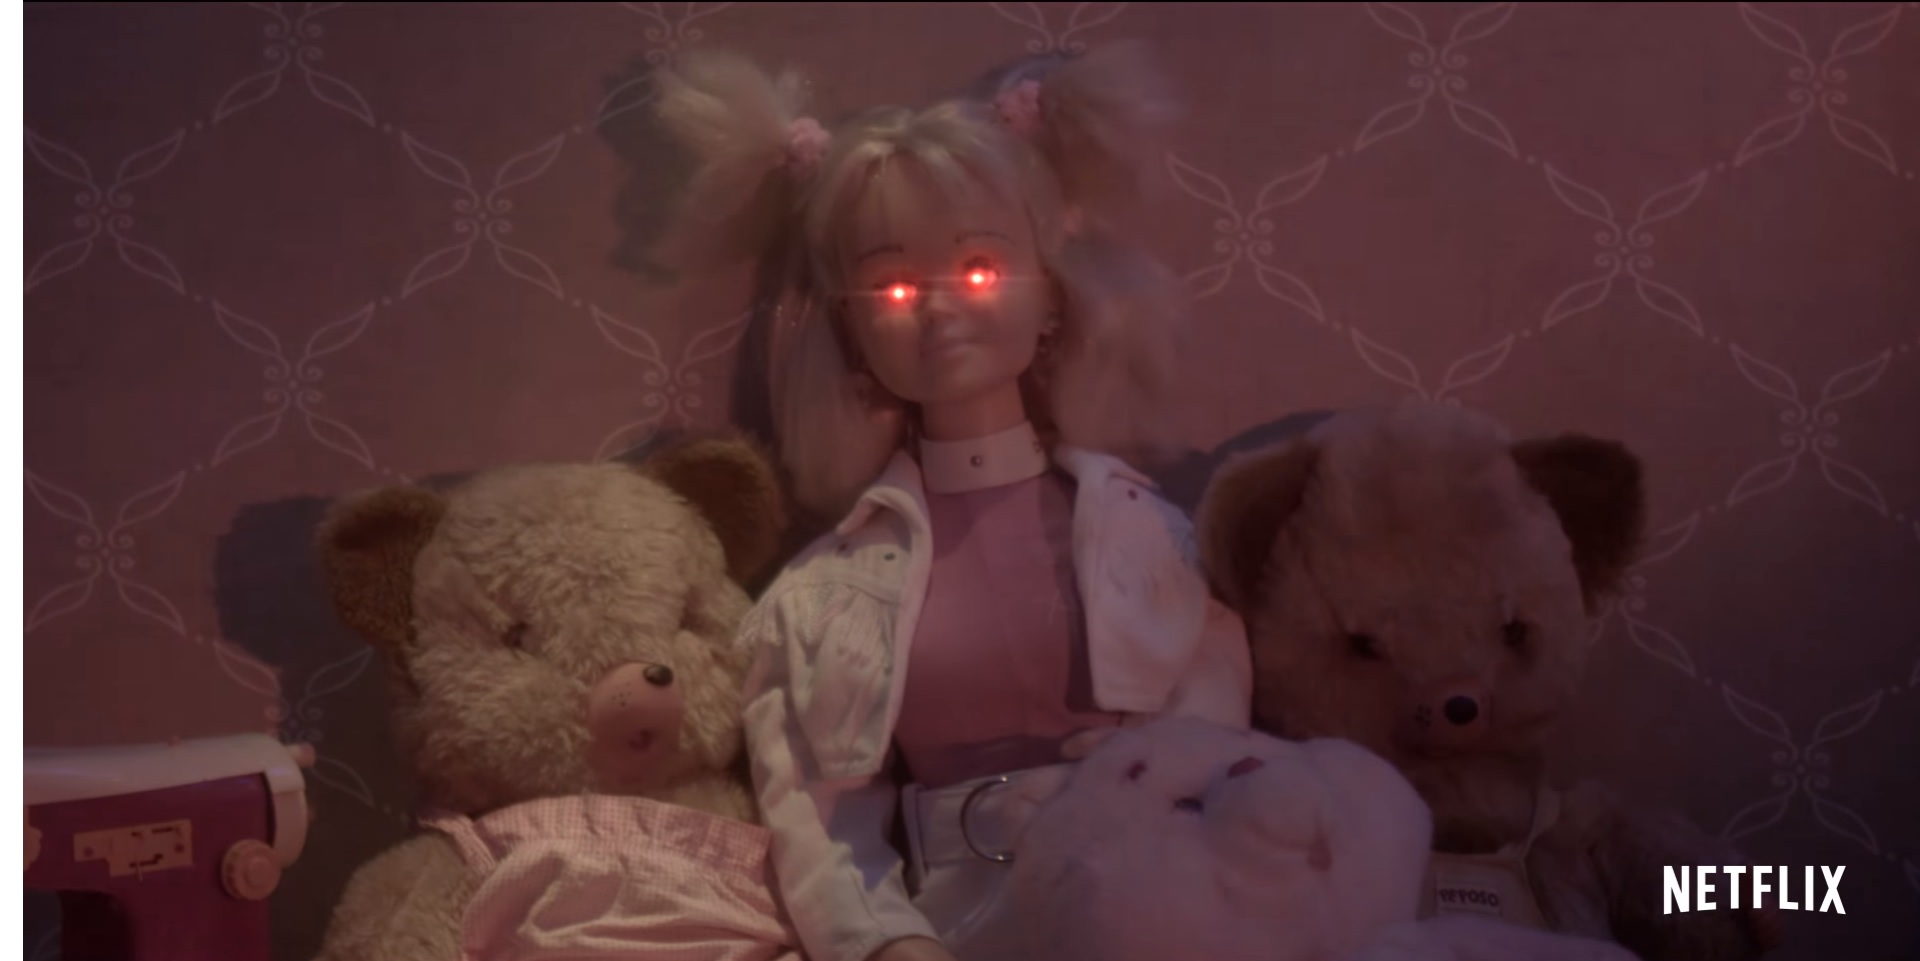 TV: Vídeo promocional de "Stranger Things" usa boneca assustadora da Xuxa 